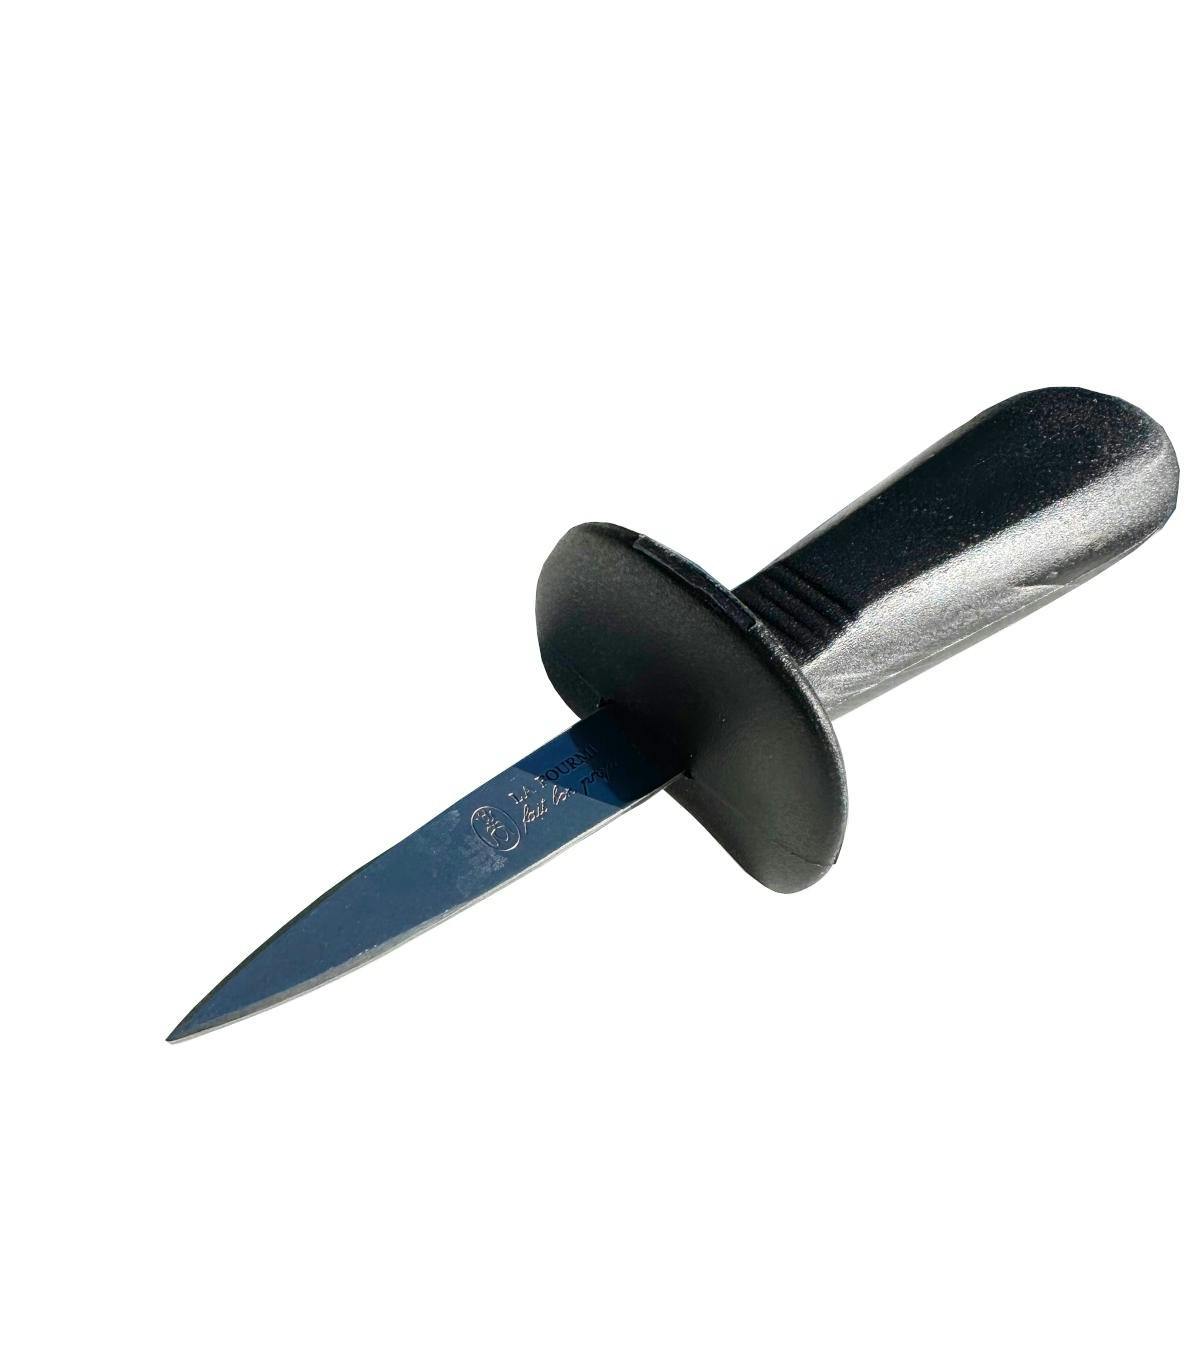 Couteau de table inox Baguette : Stellinox